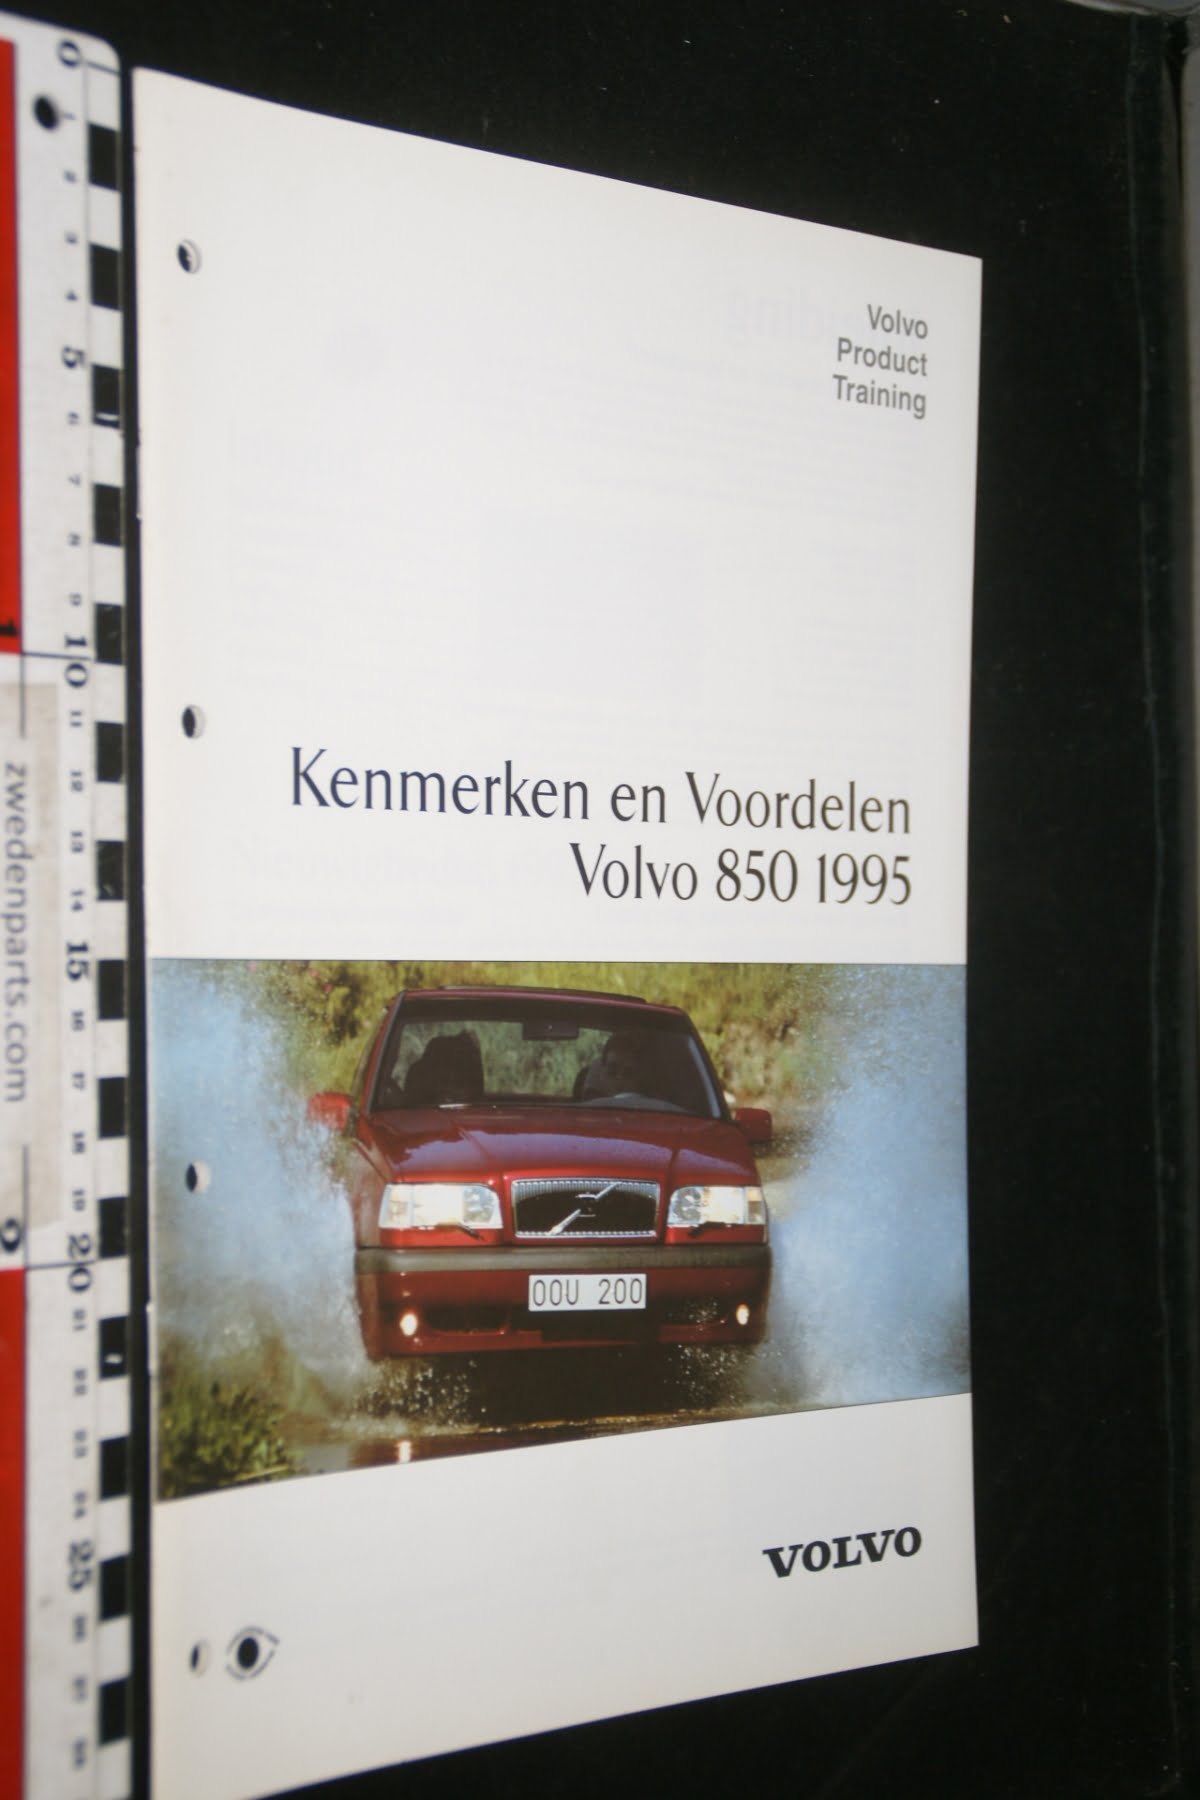 DSC02936 1995 brochure origineel Volvo Product Training 850 kenmerken en voordelen nr PV 523-31410-ab7b5252